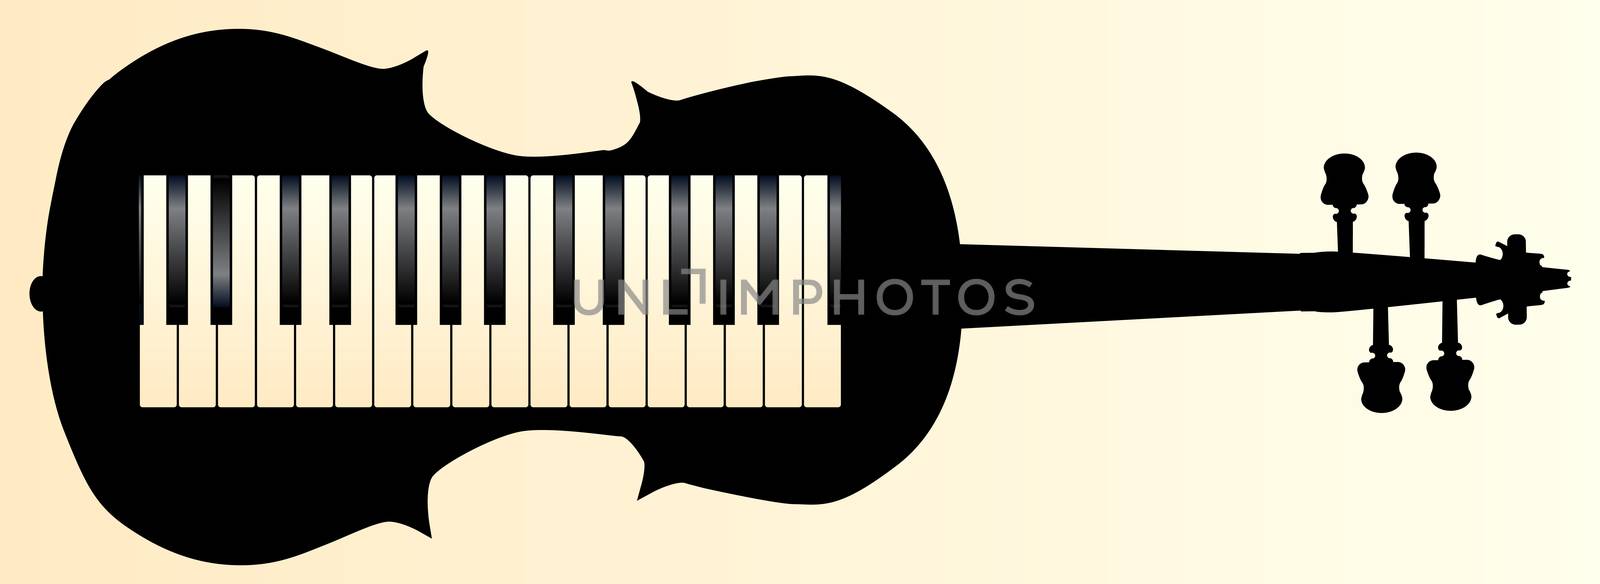 A piano keybboard set into a violin silhouette